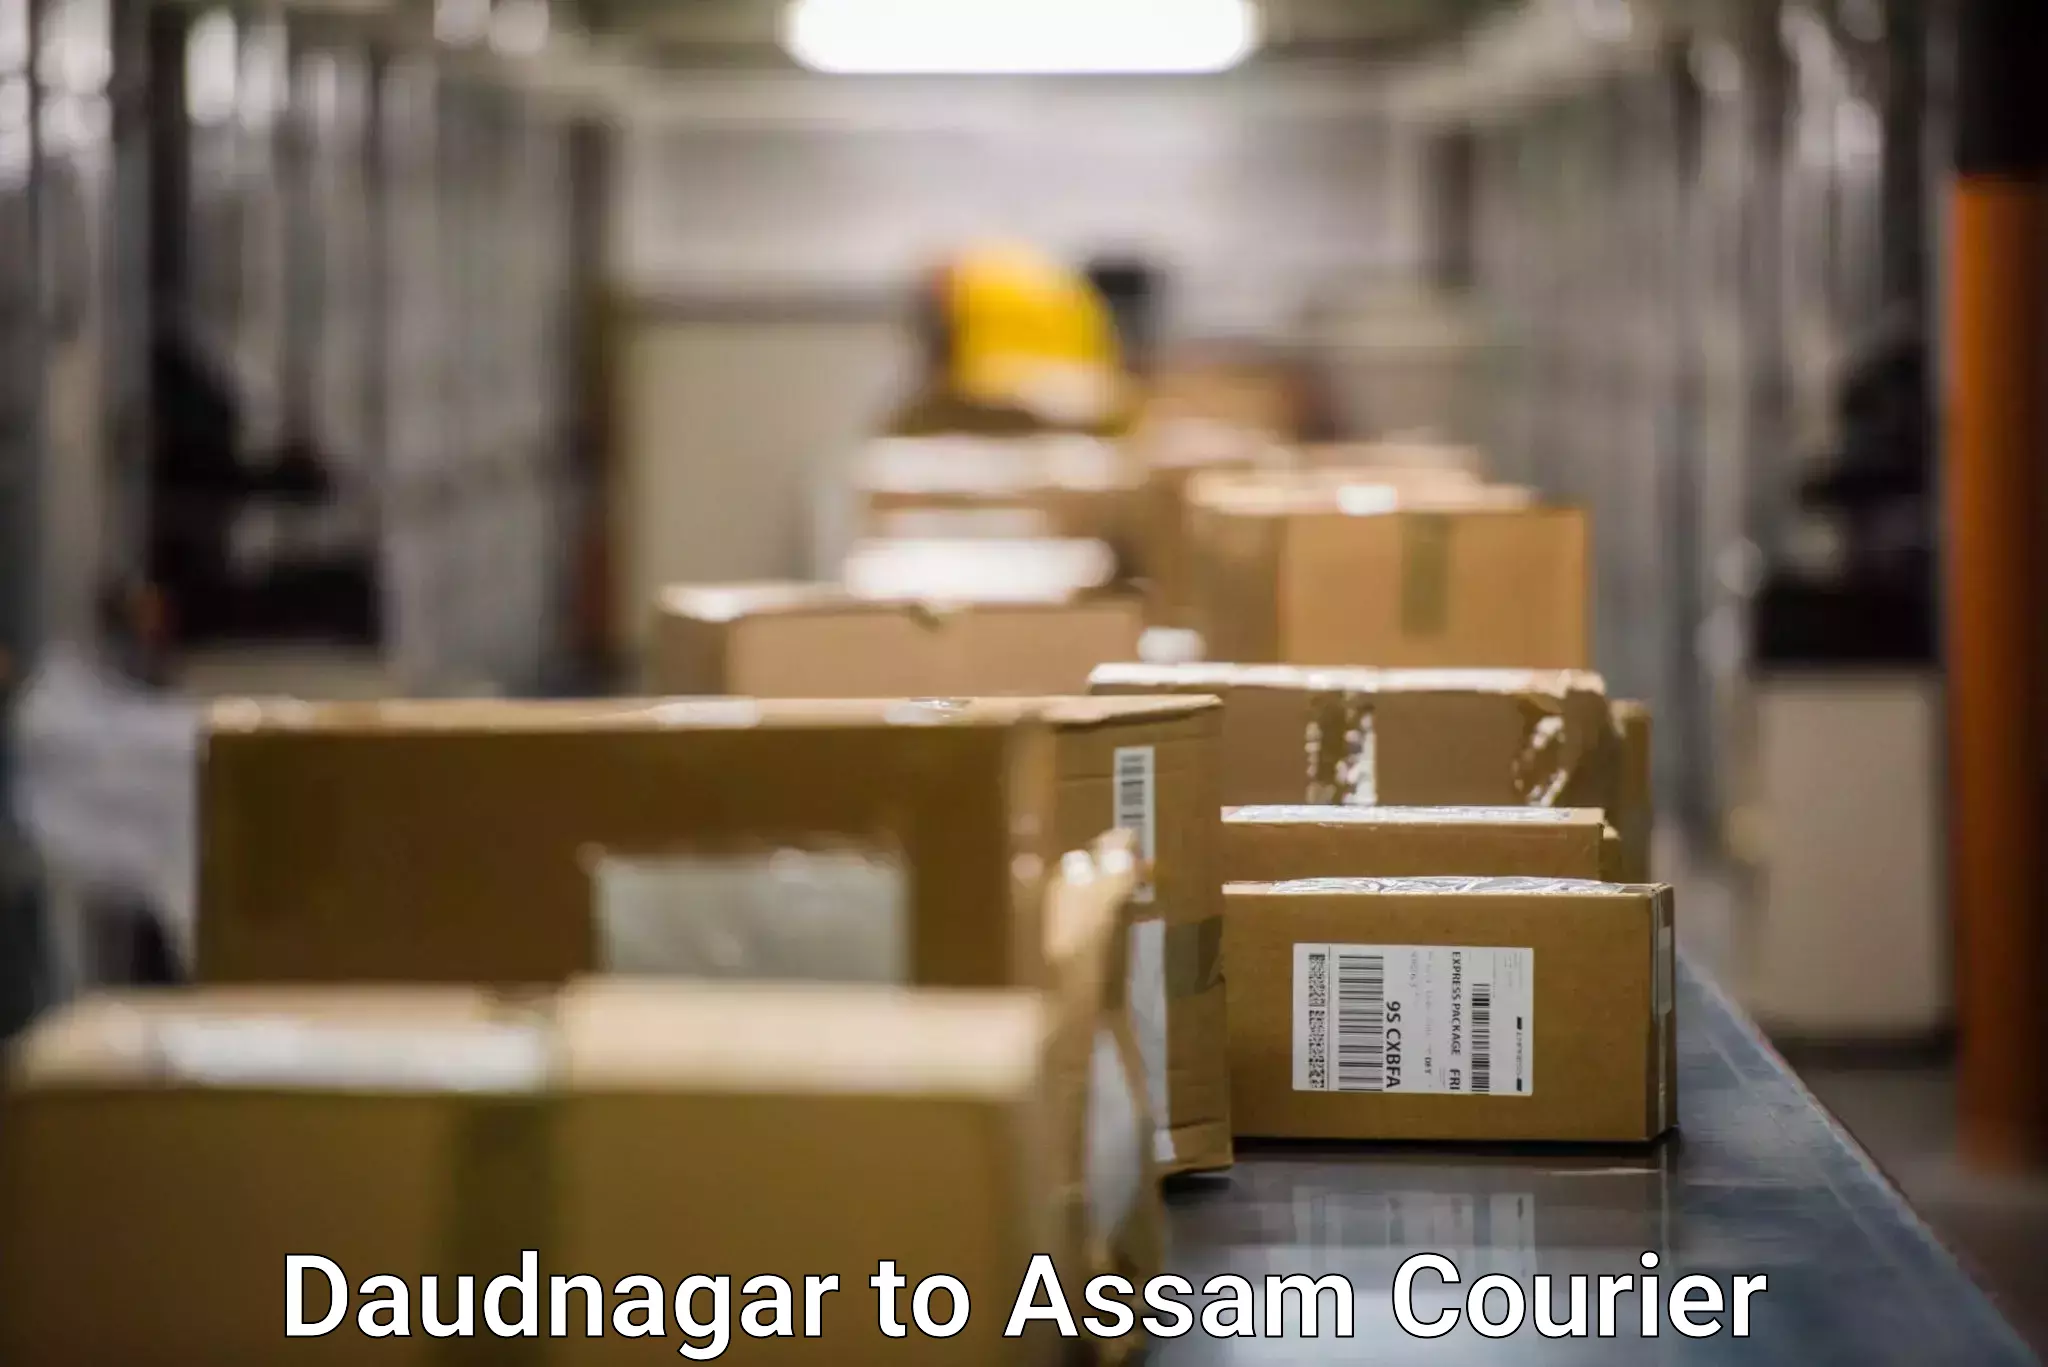 Courier service comparison Daudnagar to Dergaon